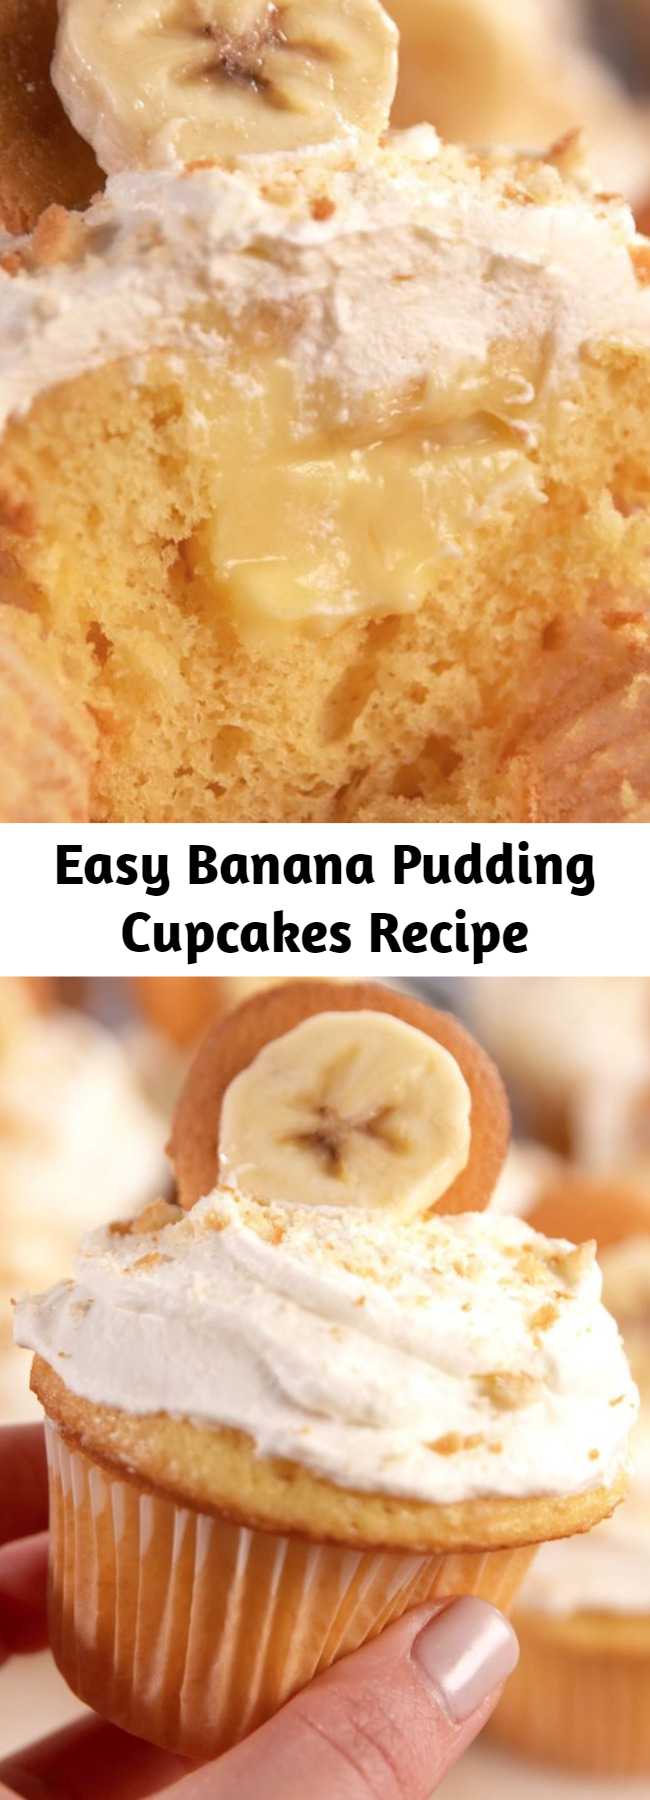 Easy Banana Pudding Cupcakes Recipe - Check out this easy recipe for adorable banana pudding cupcakes. Banana pudding lovers rejoice!